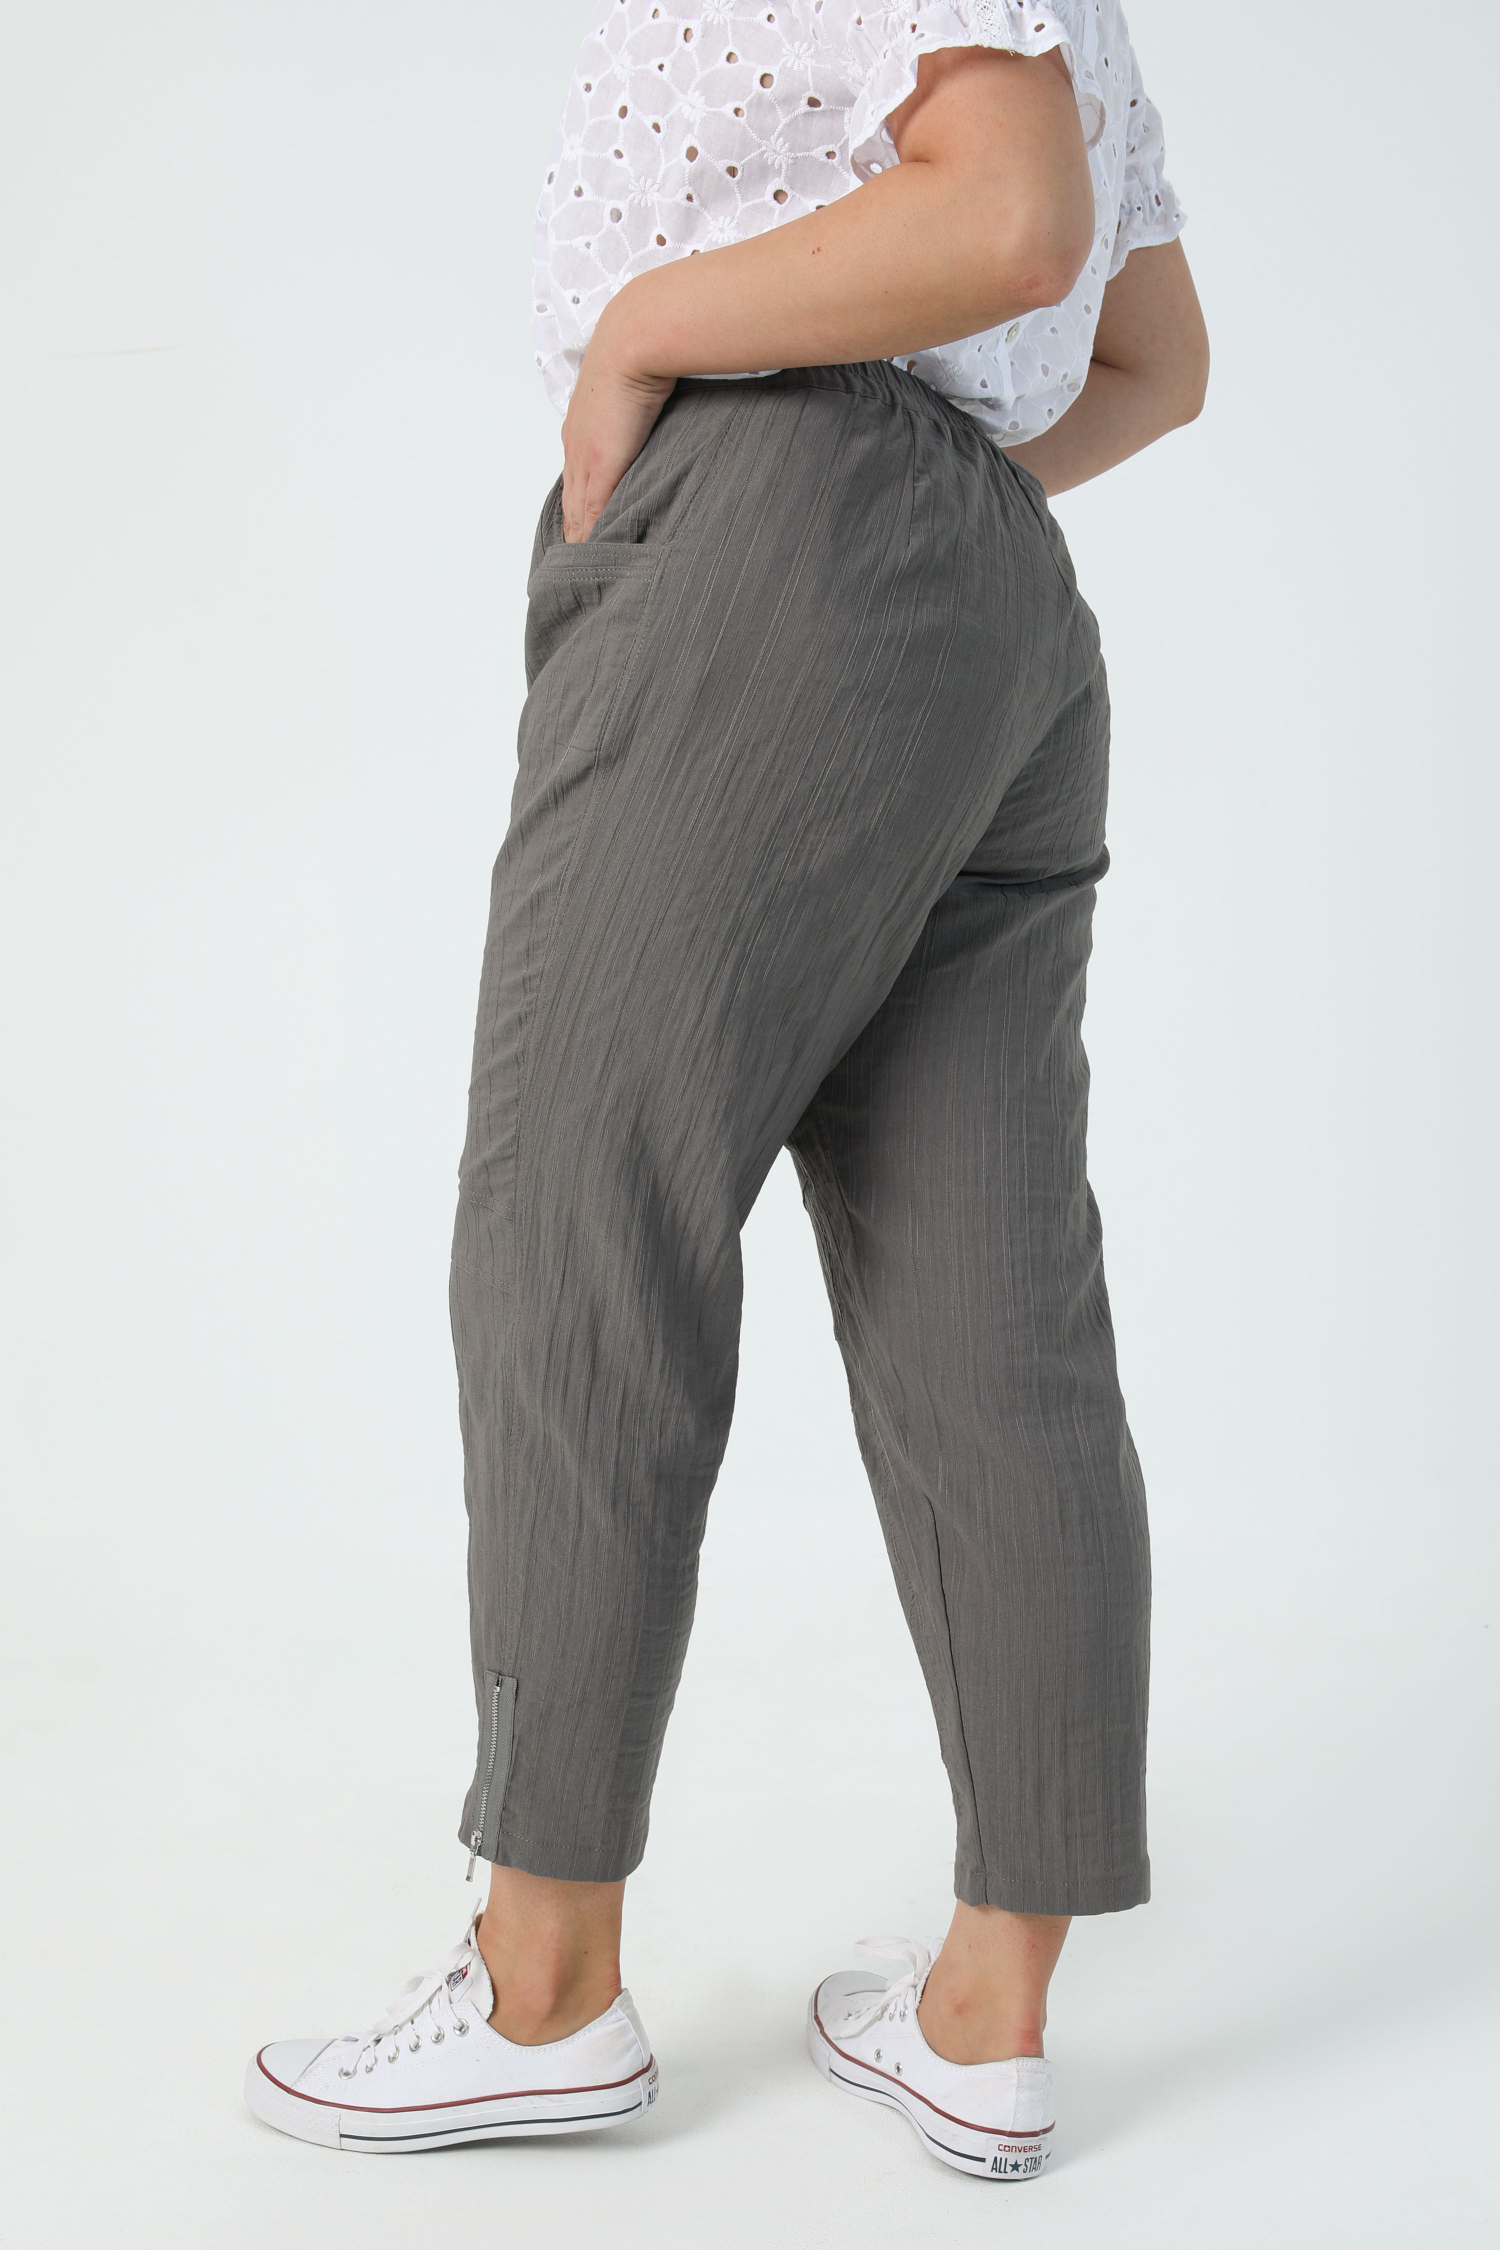 Plain textured pants